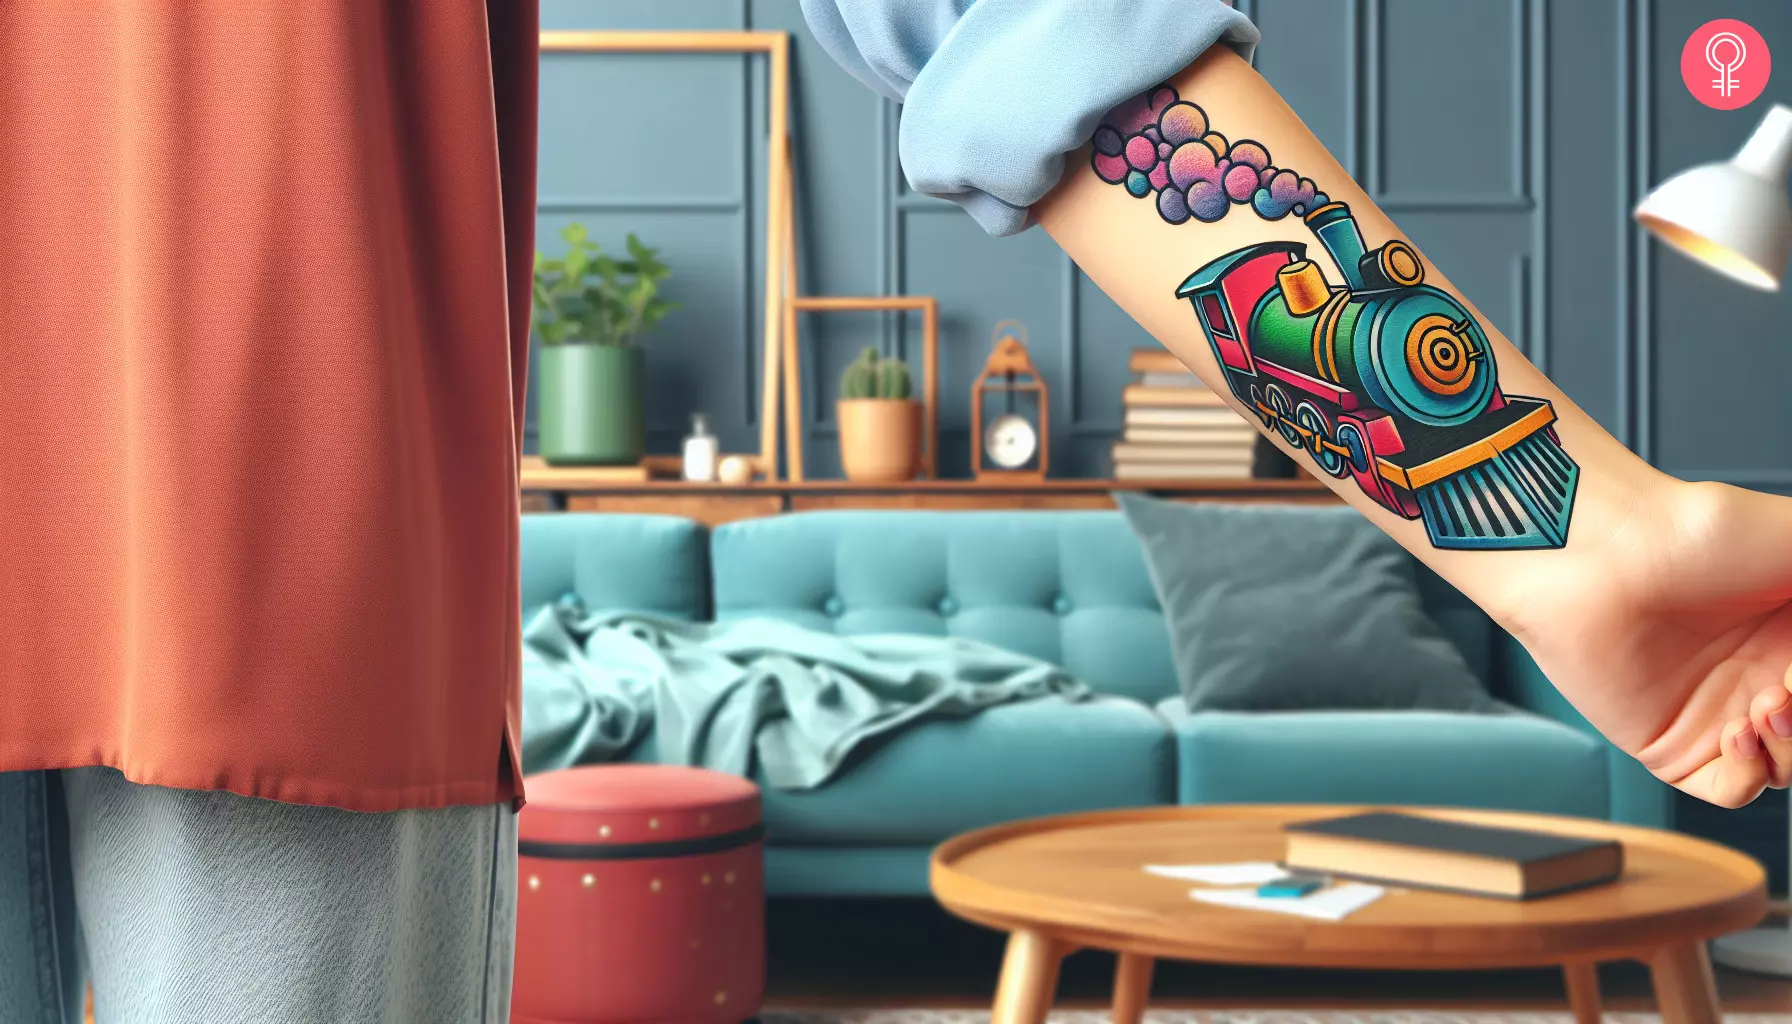 A colorful train tattoo on the forearm